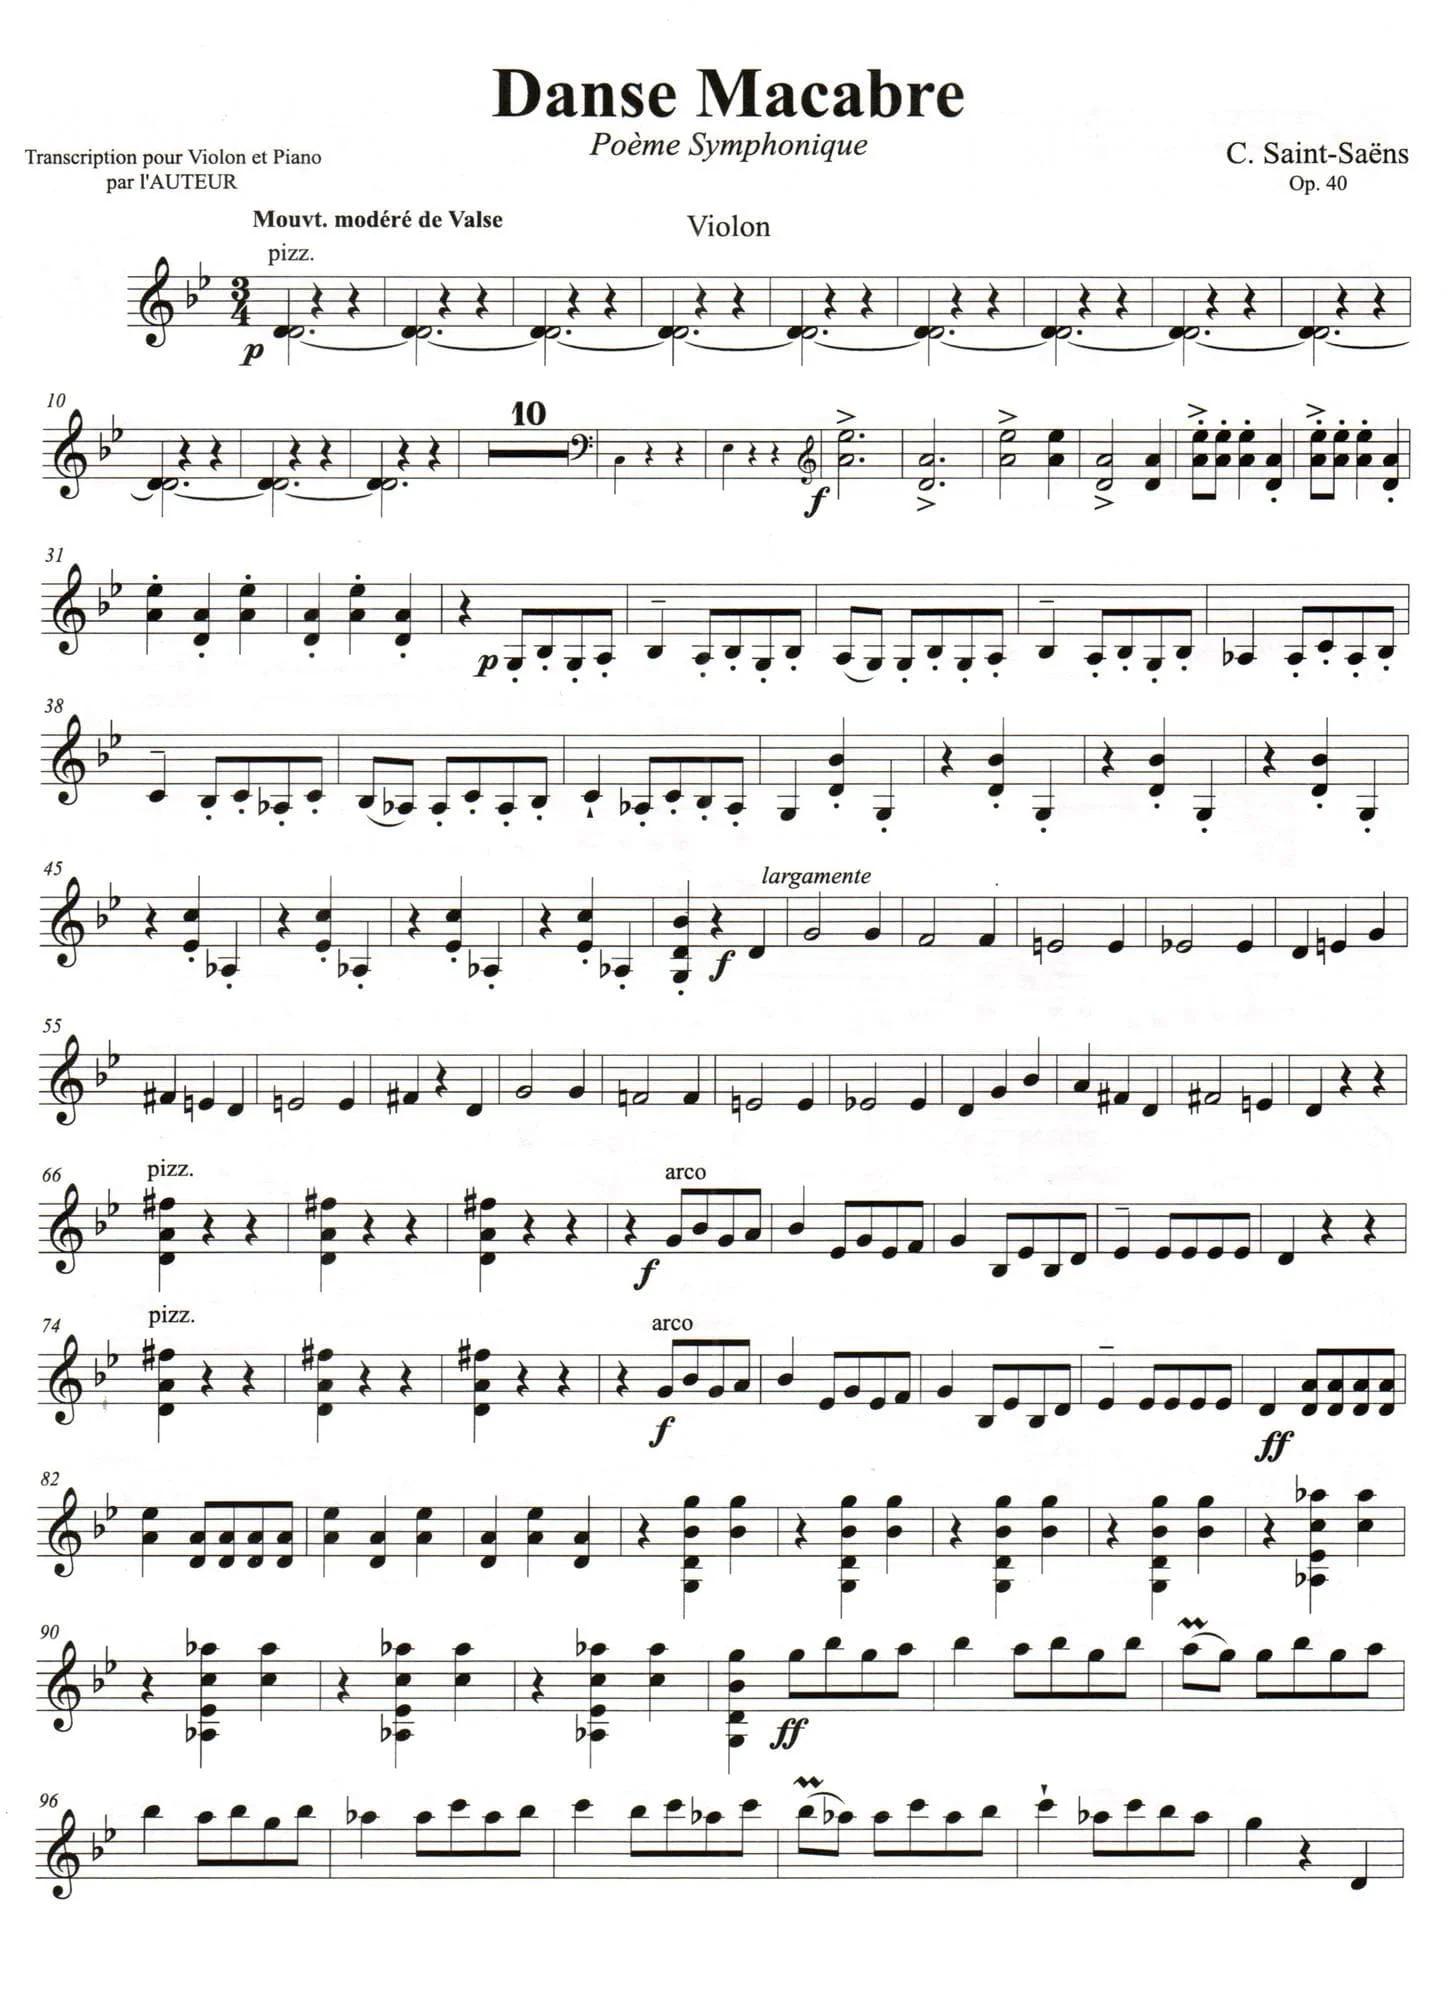 danse macabre violin sheet - What grade level is Danse Macabre